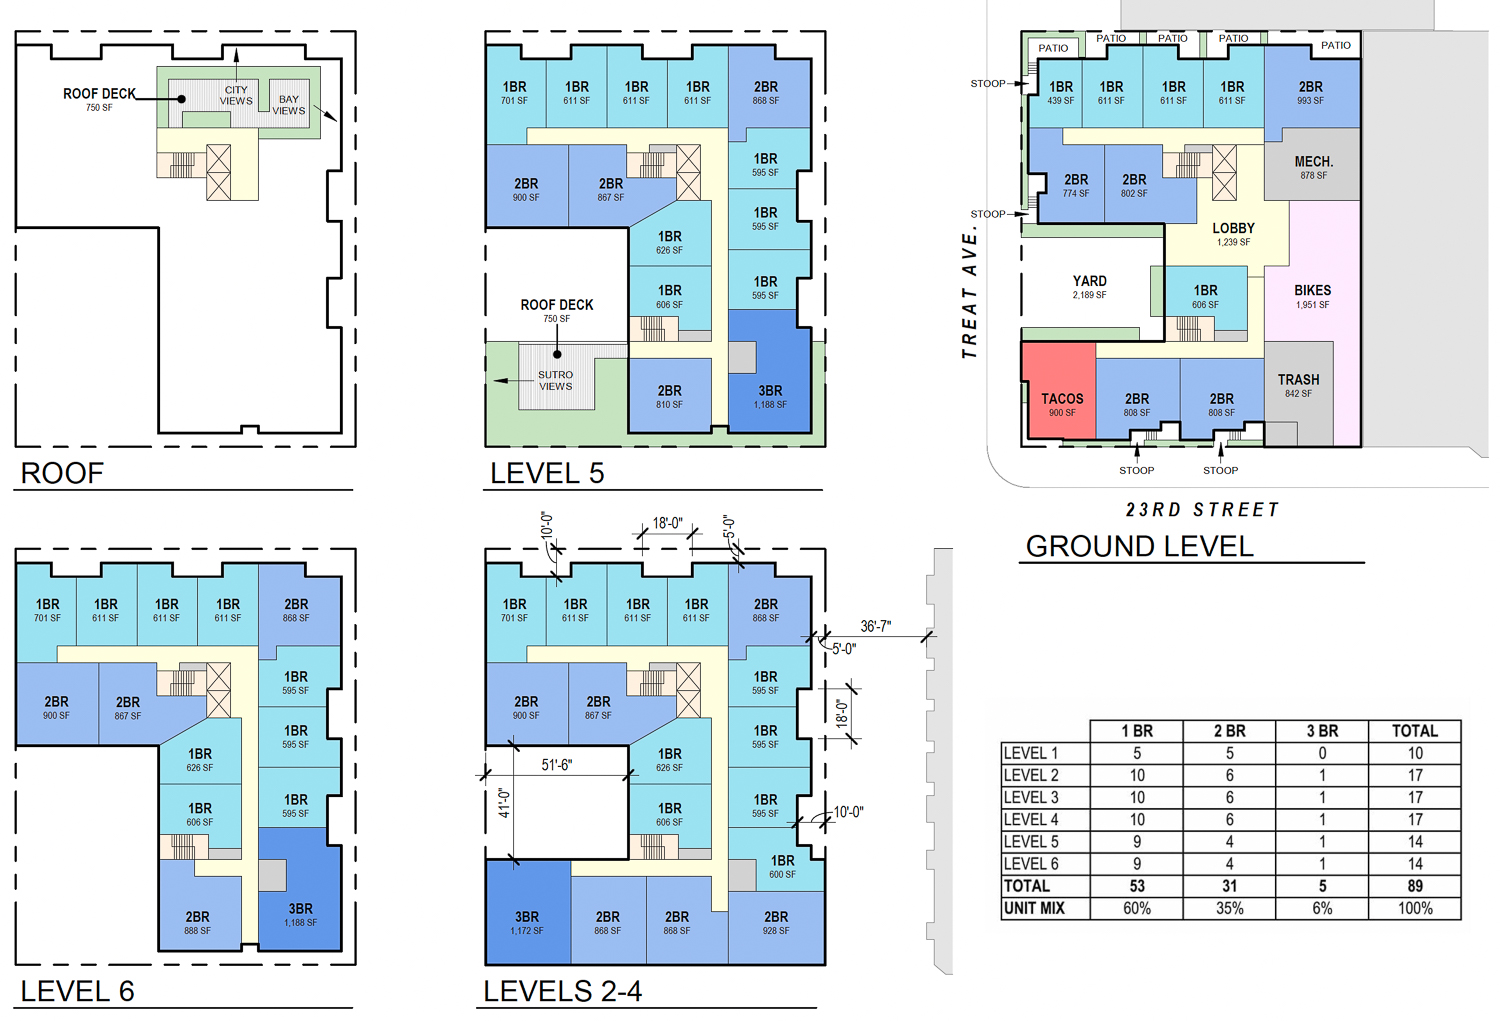 3050 23rd Street state bonus density floor plans, illustration by Kerman Morris Architects